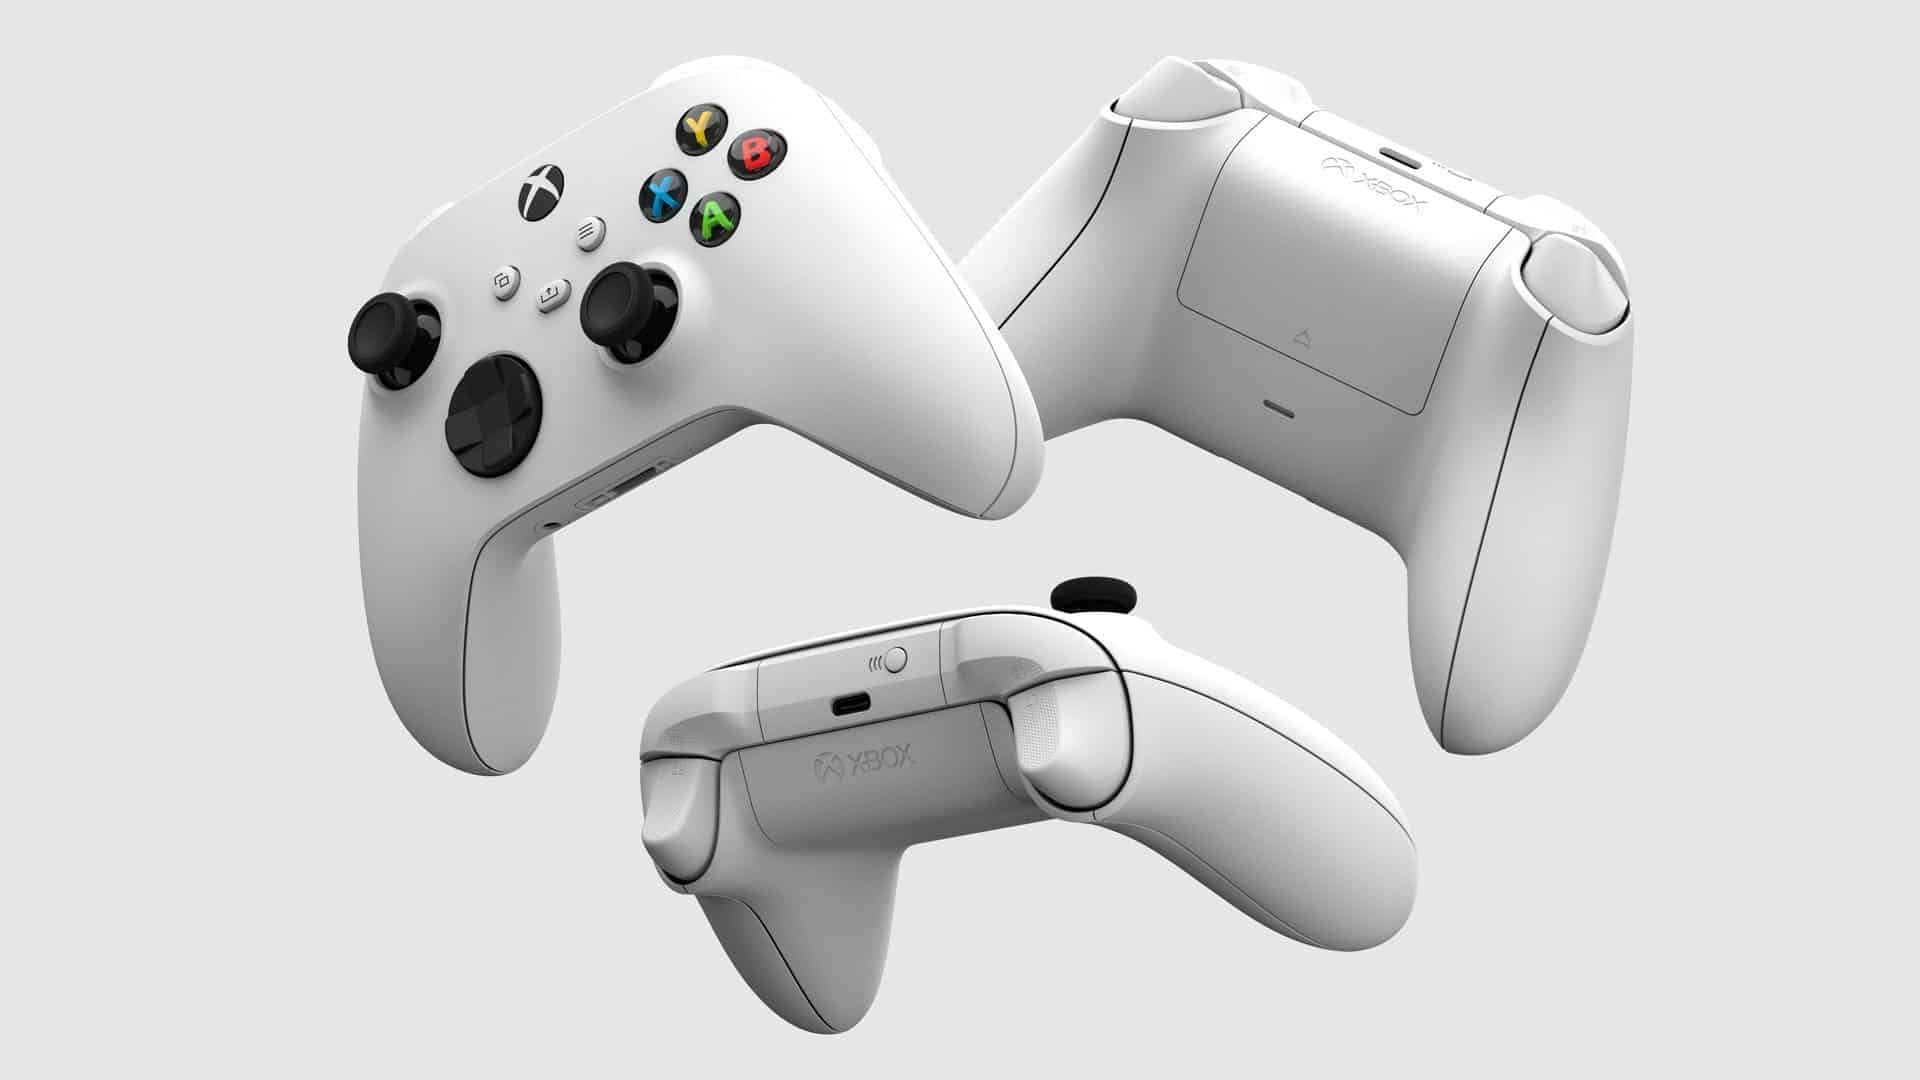 Microsoft Xbox Wireless Controller White Gamepad PC, Xbox One S